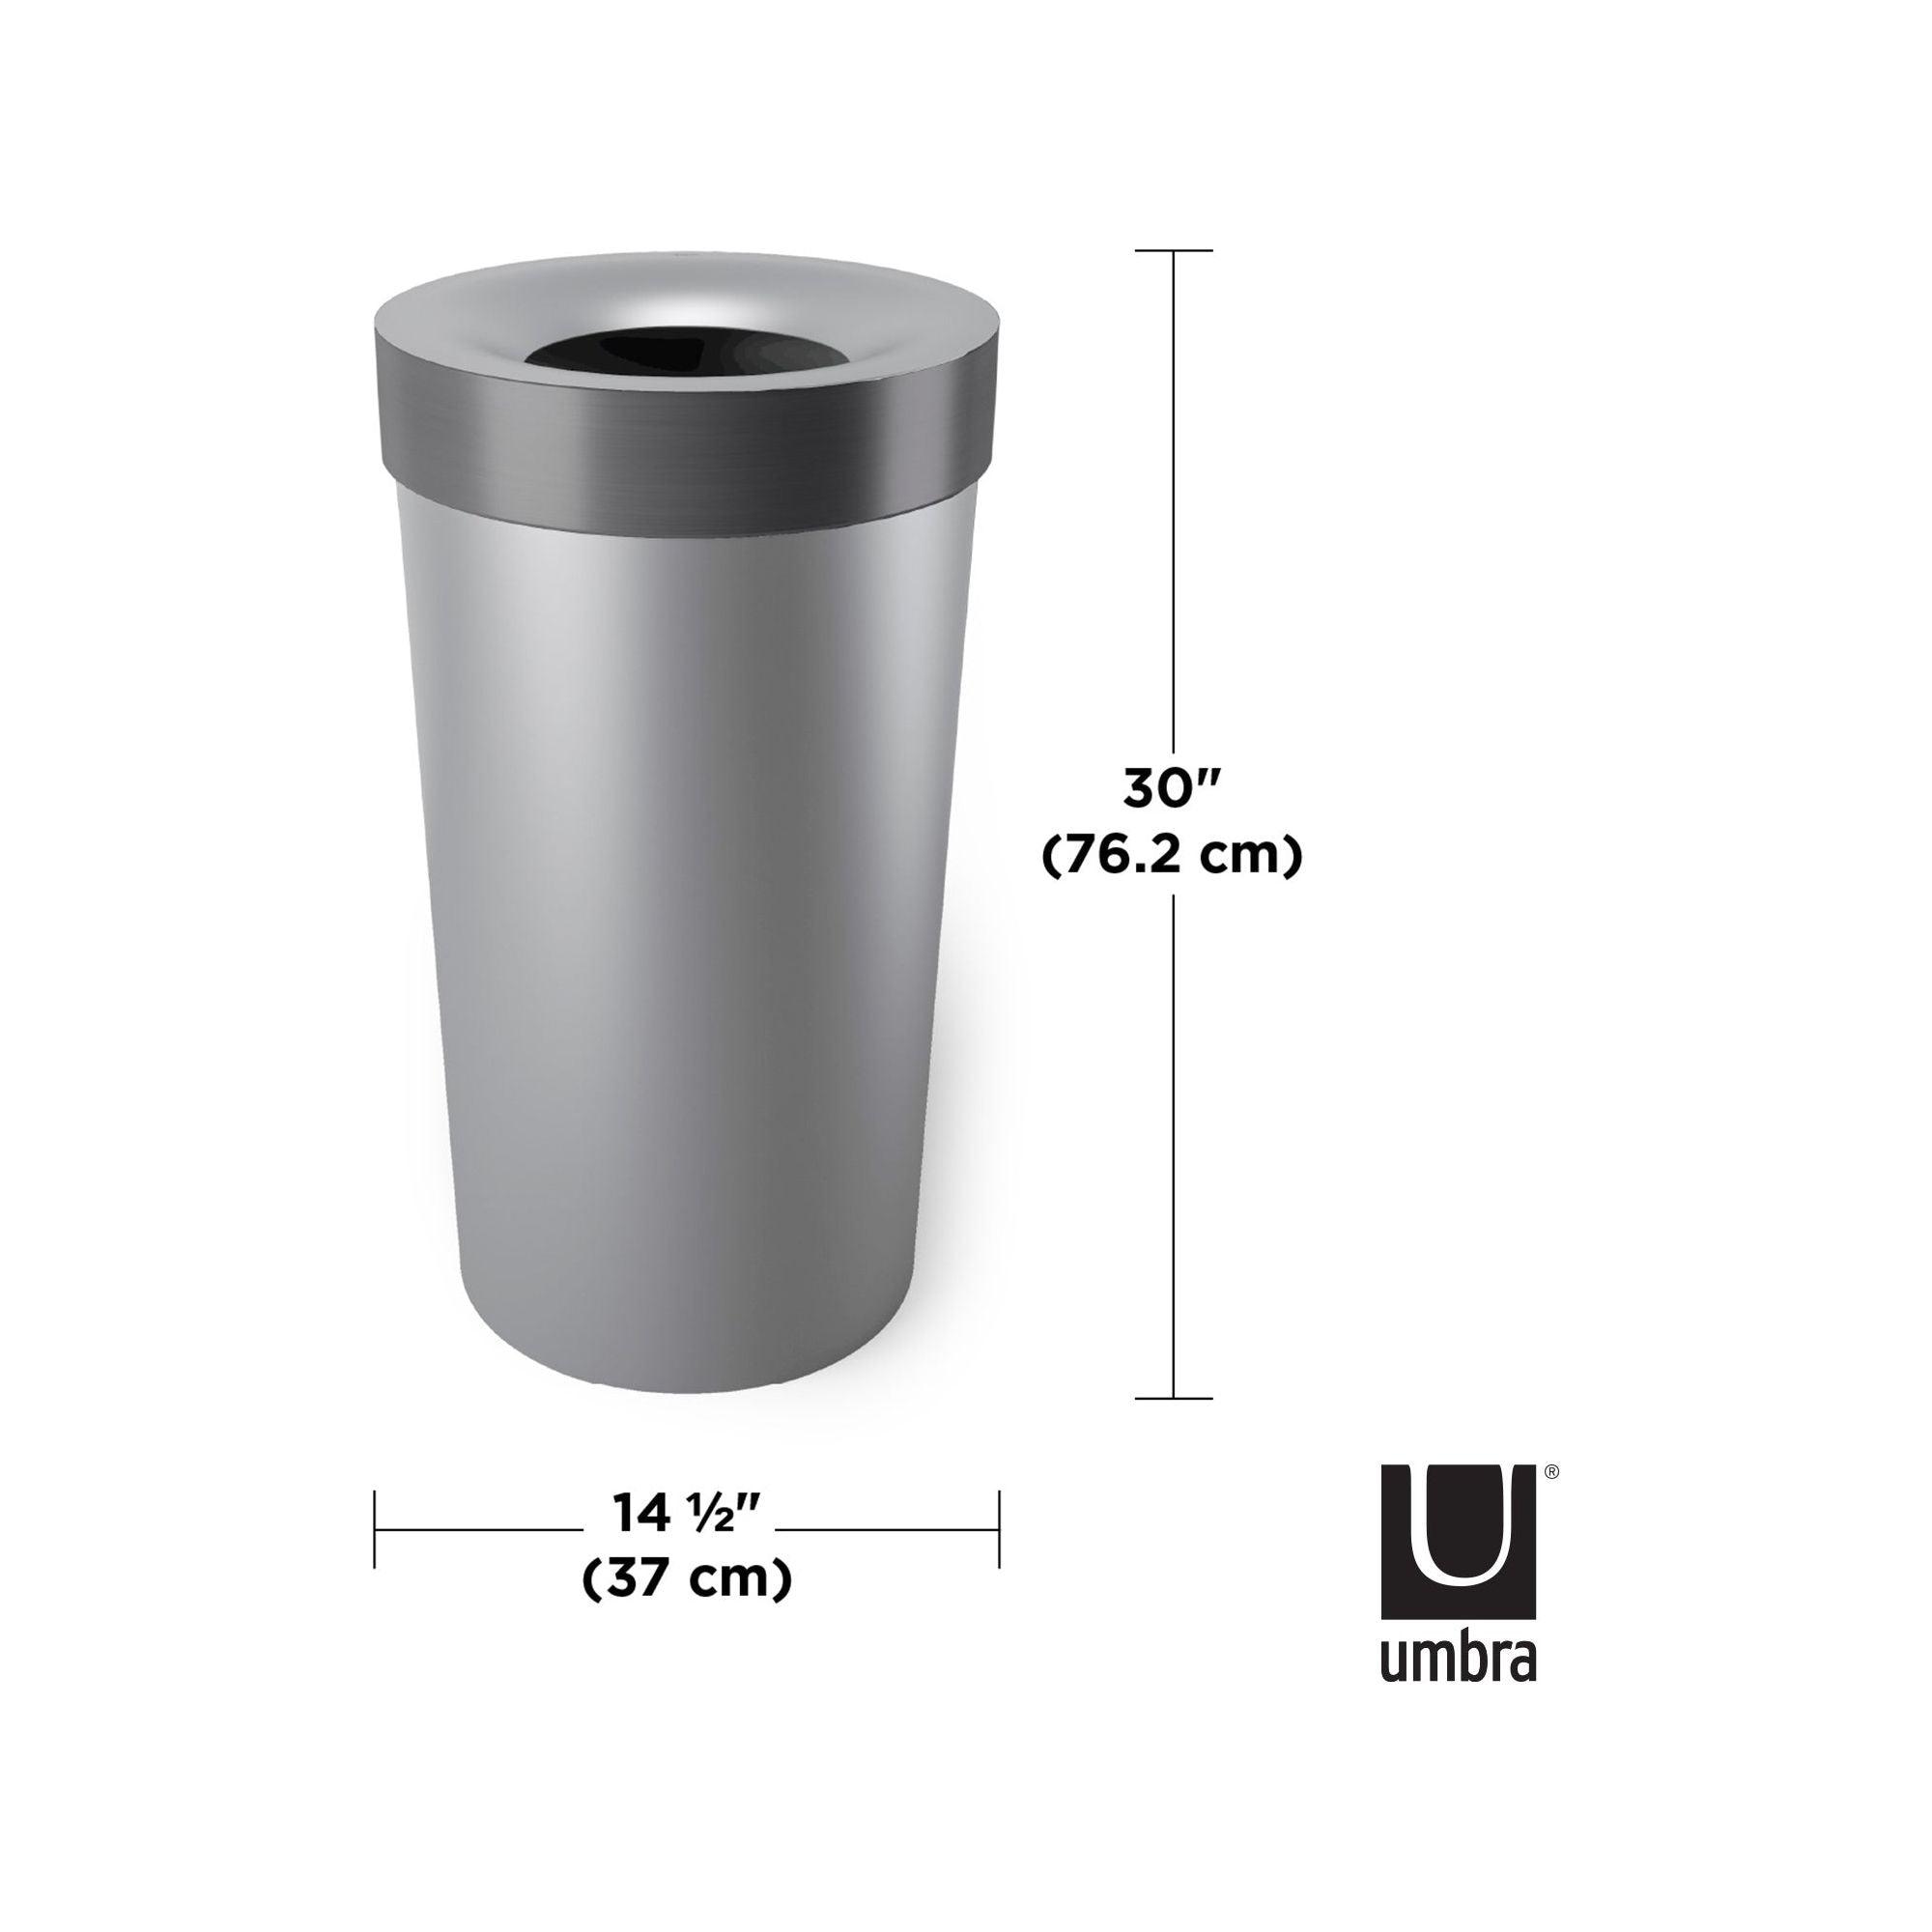 Umbra - Vento 16.5 Gallon (62L) Trash Can - Lights Canada